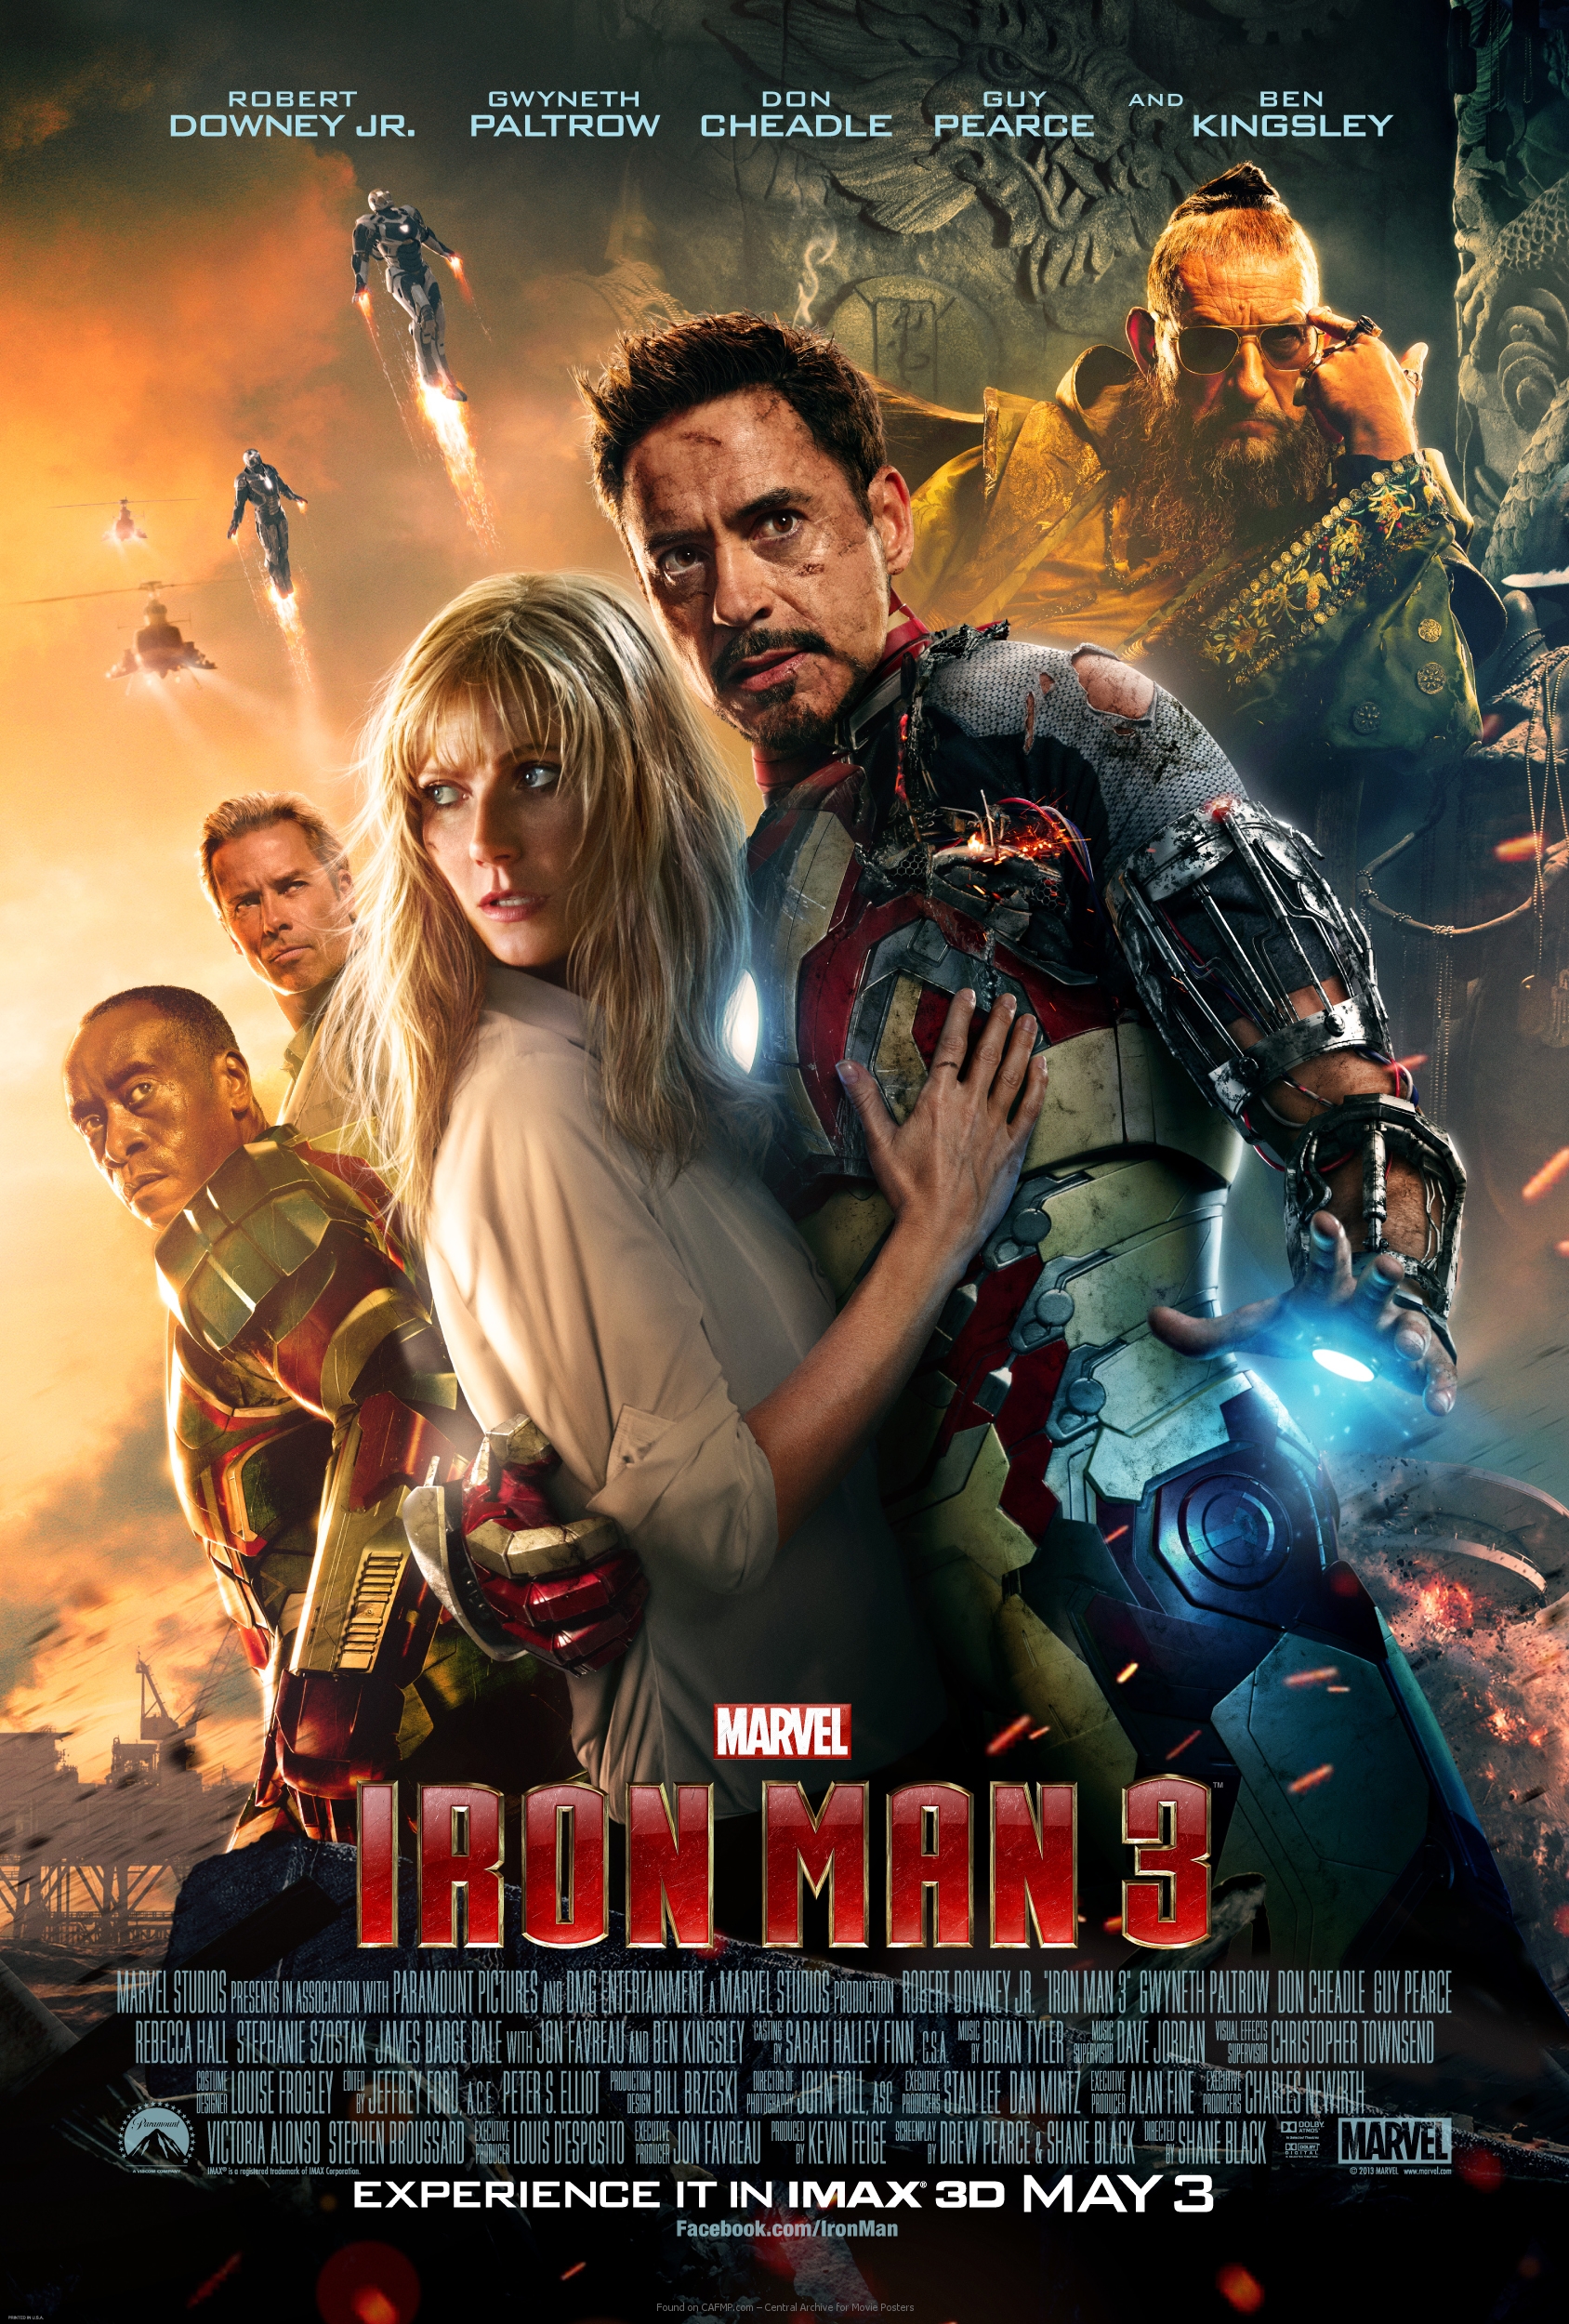 iron man 1 full movie online free no download weed